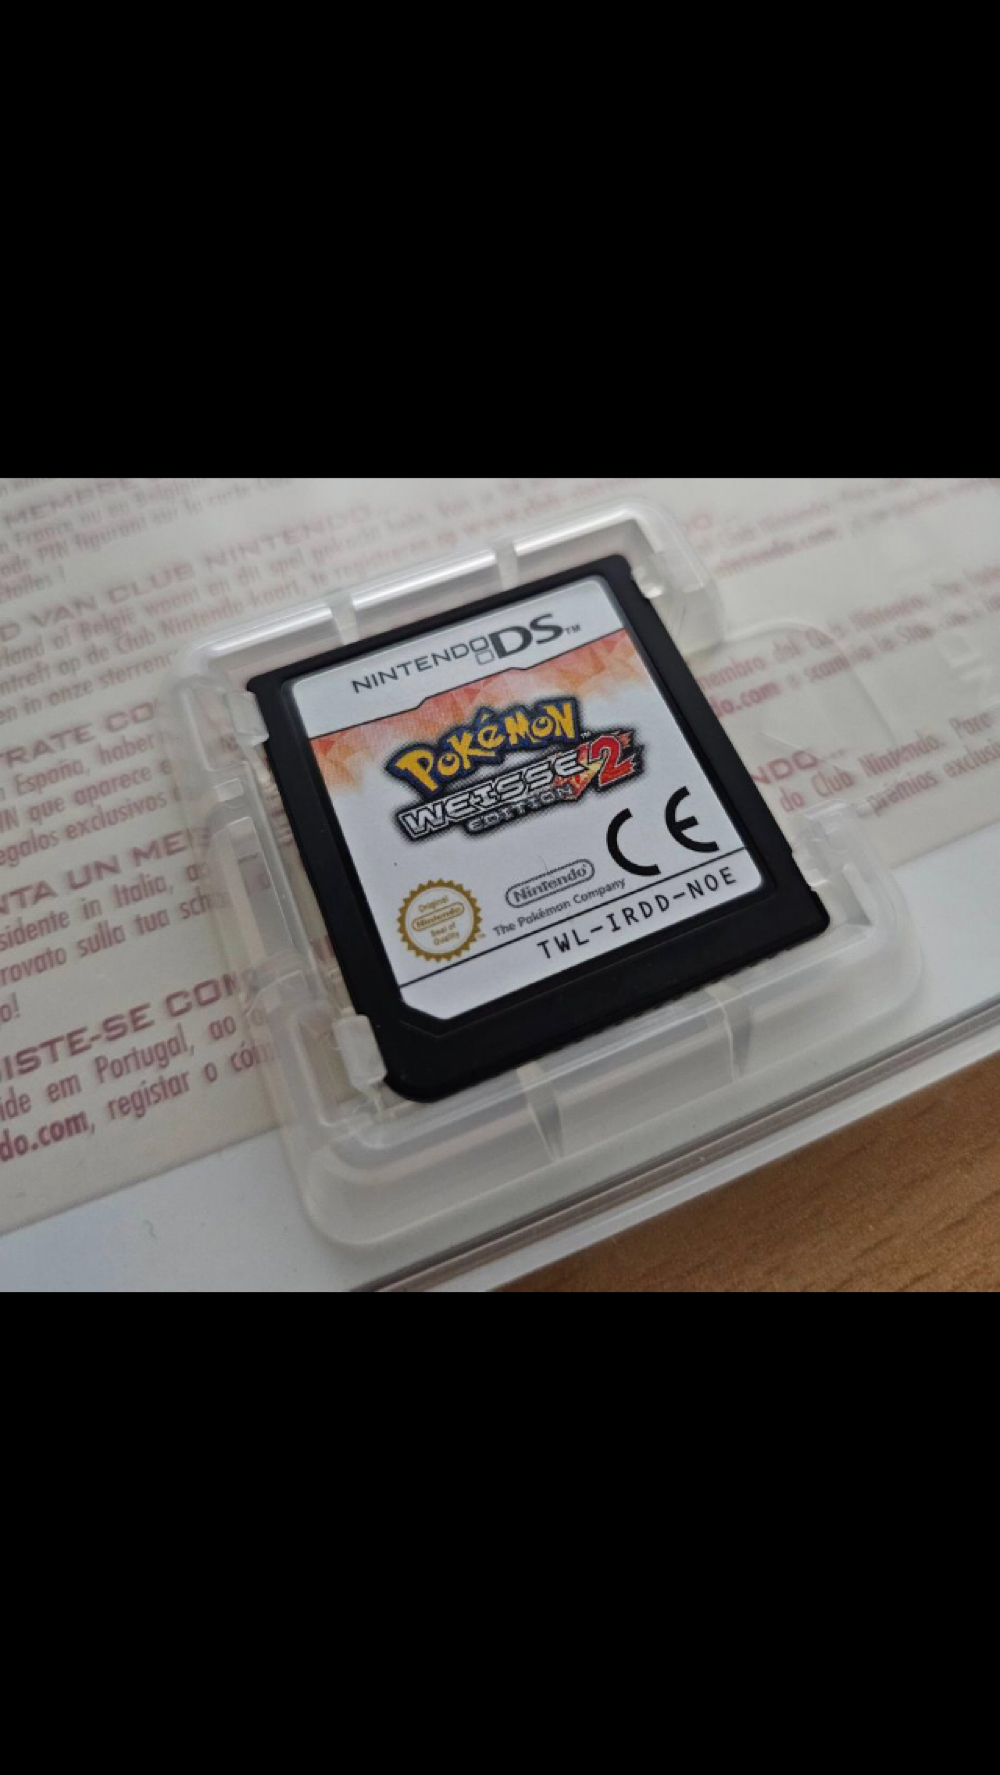 Pokémon Weiße Edition 2 Nintendo DS 